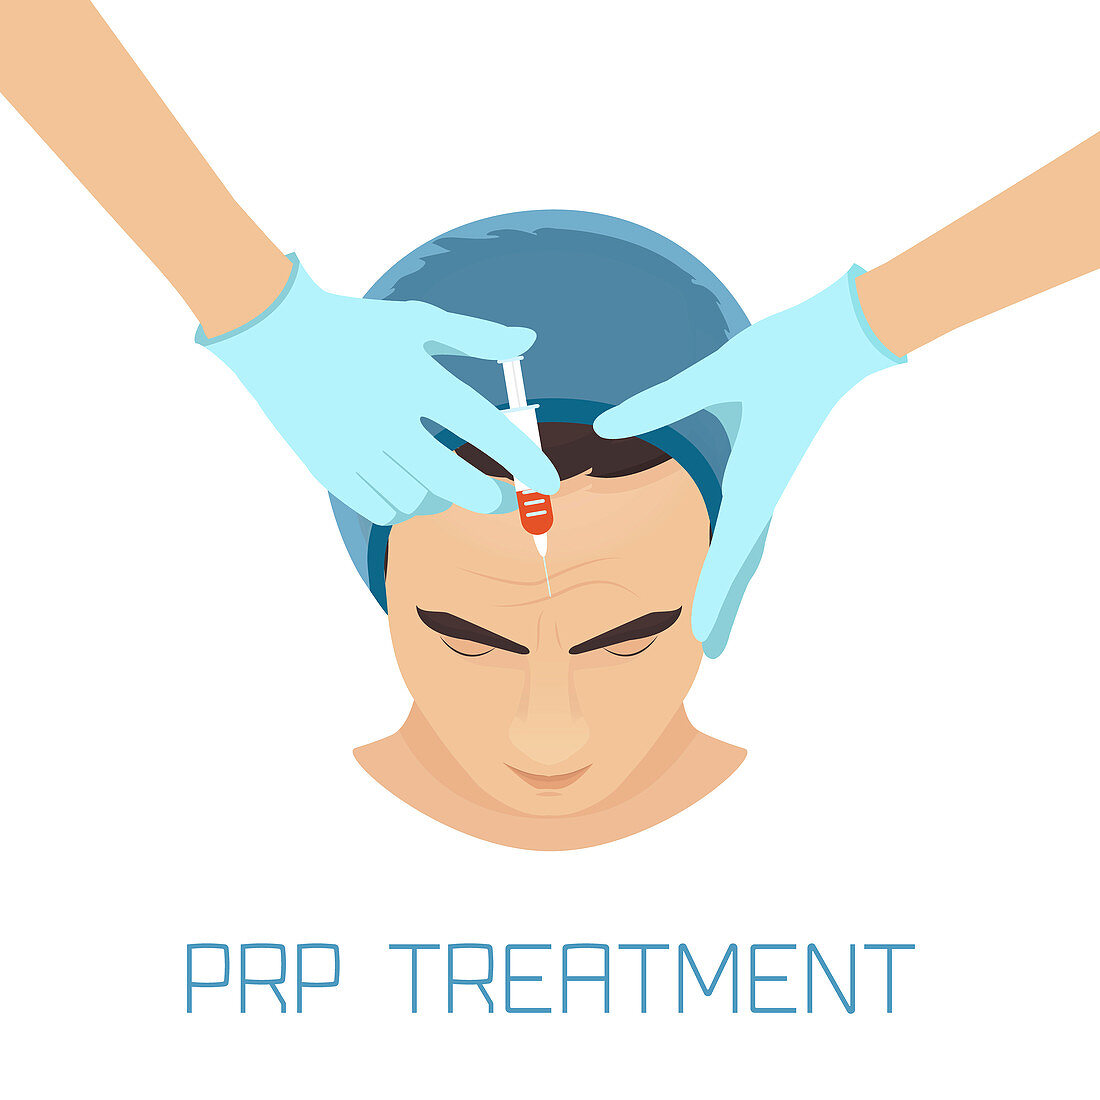 PRP facial treatment for men, illustration